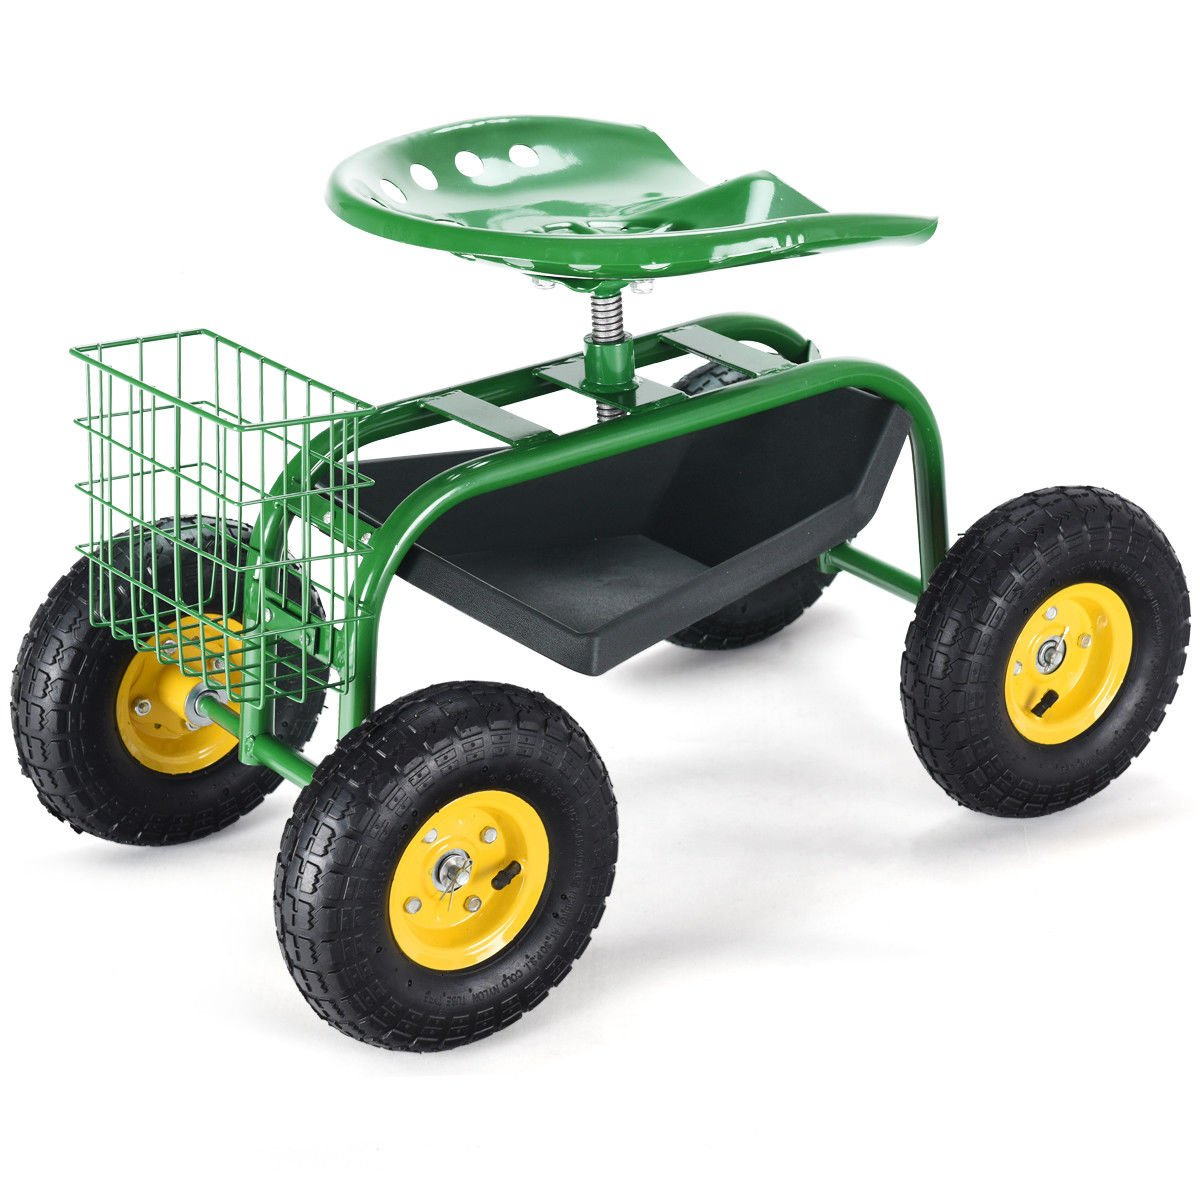 Giantex Garden Cart Rolling Tray Gardening Planting with Work Seat, Green